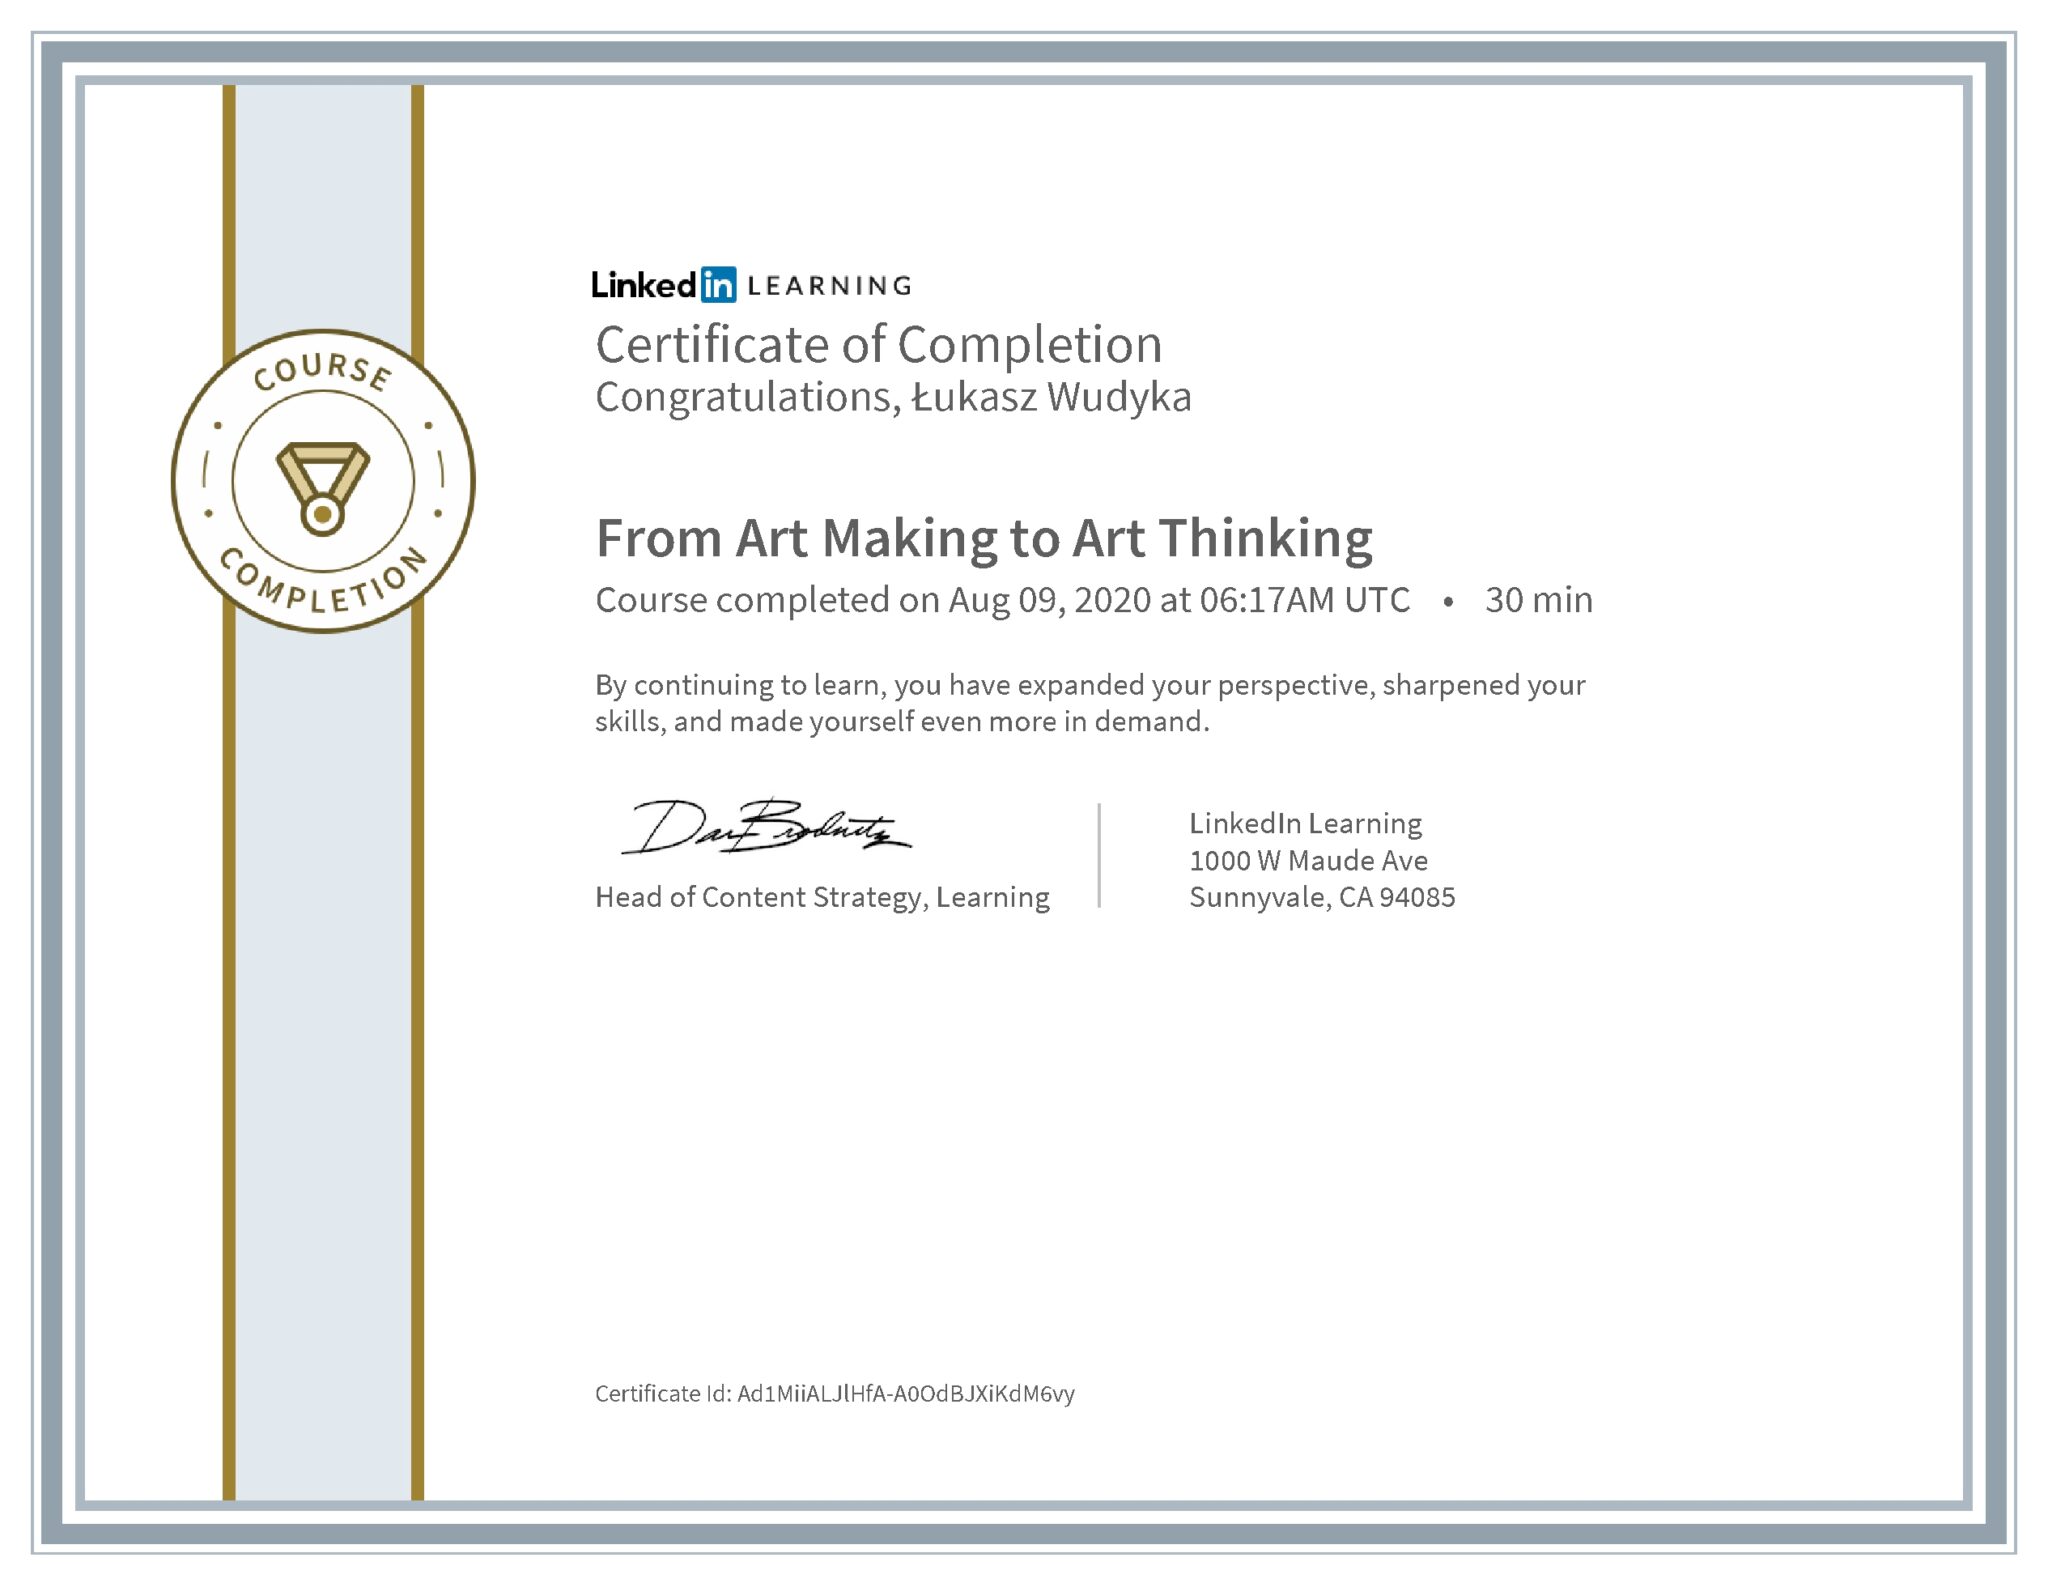 Łukasz Wudyka certyfikat LinkedIn From Art Making to Art Thinking